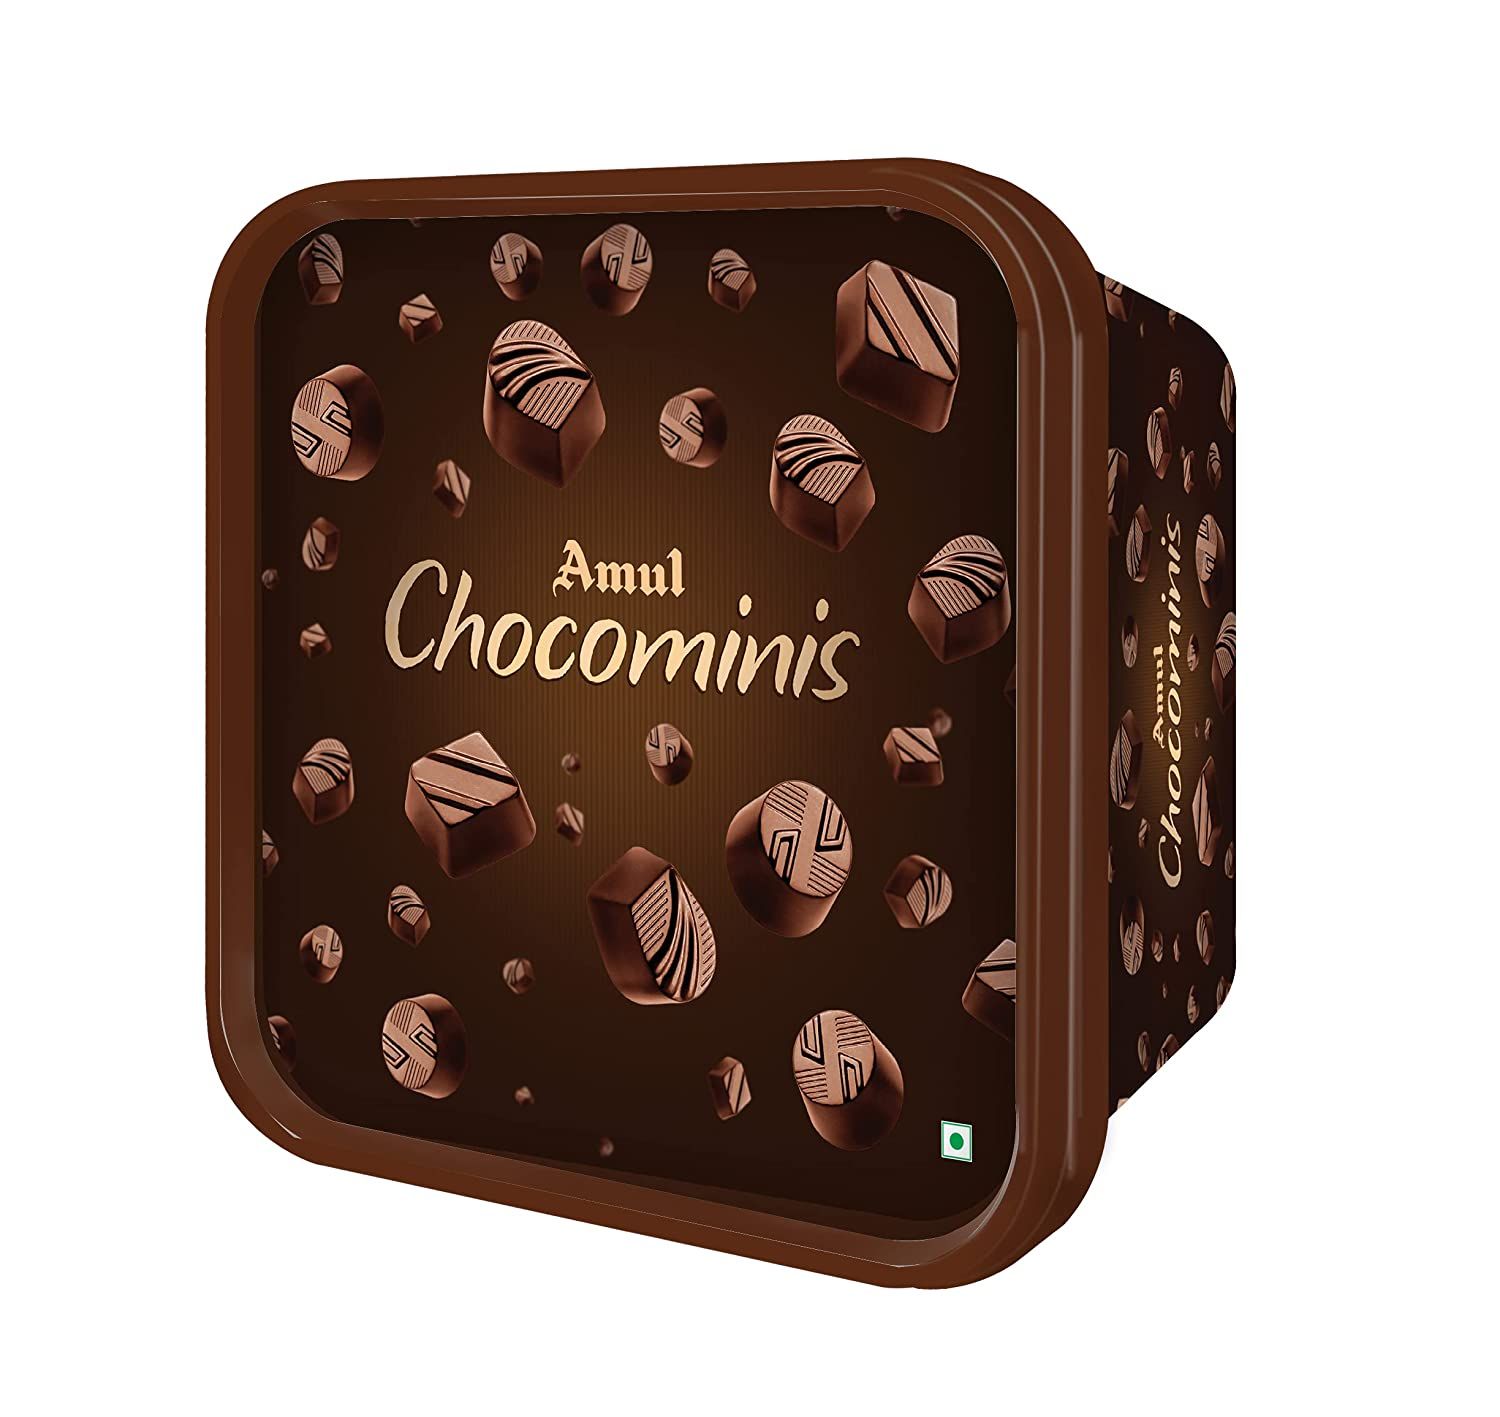 Amul Chocomini Chocolate Image